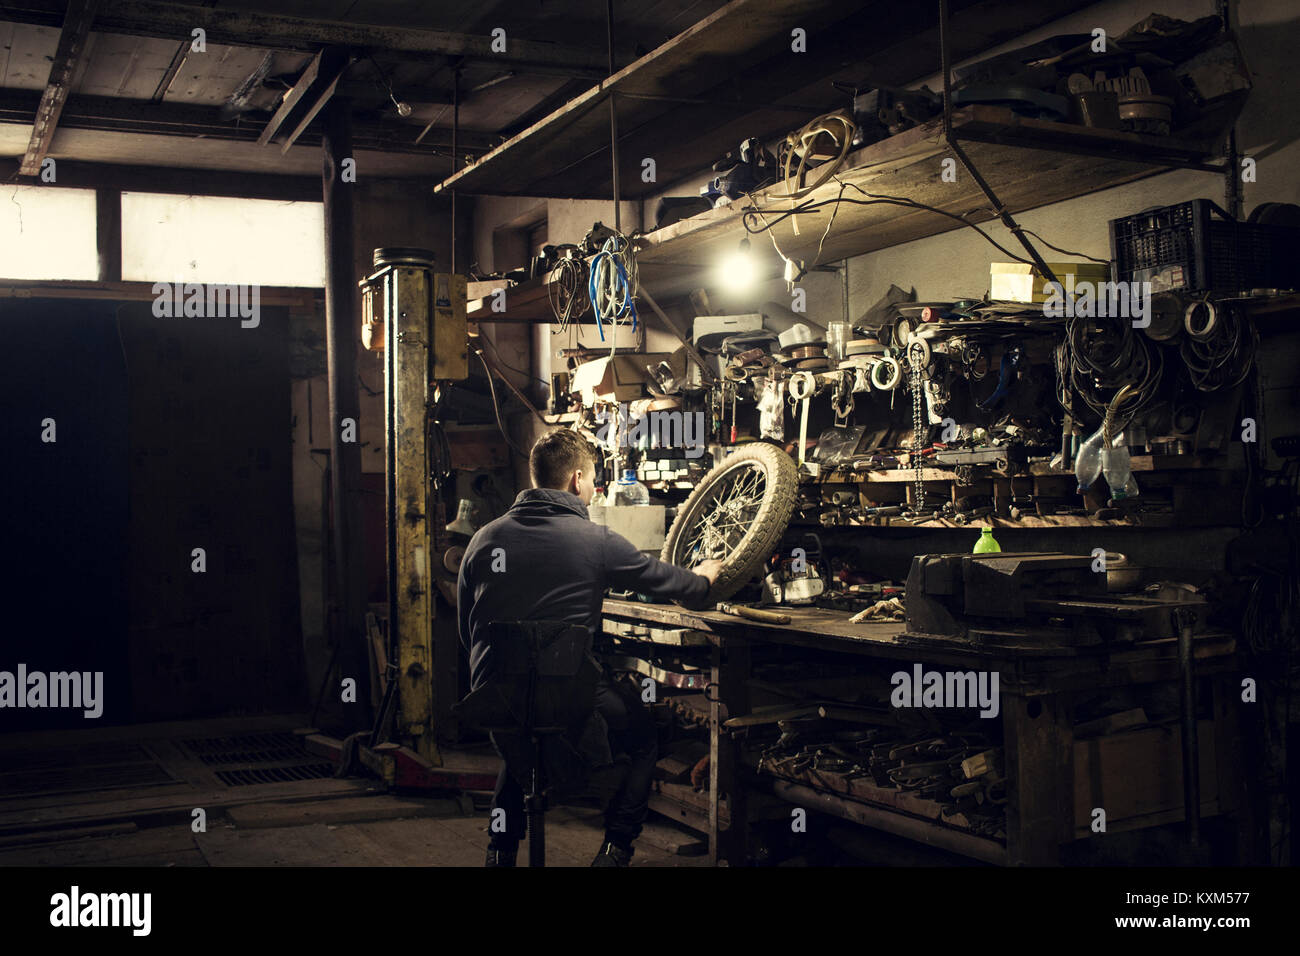 Mechanic repairing vintage motorcycle wheel at workshop bench Stock Photo